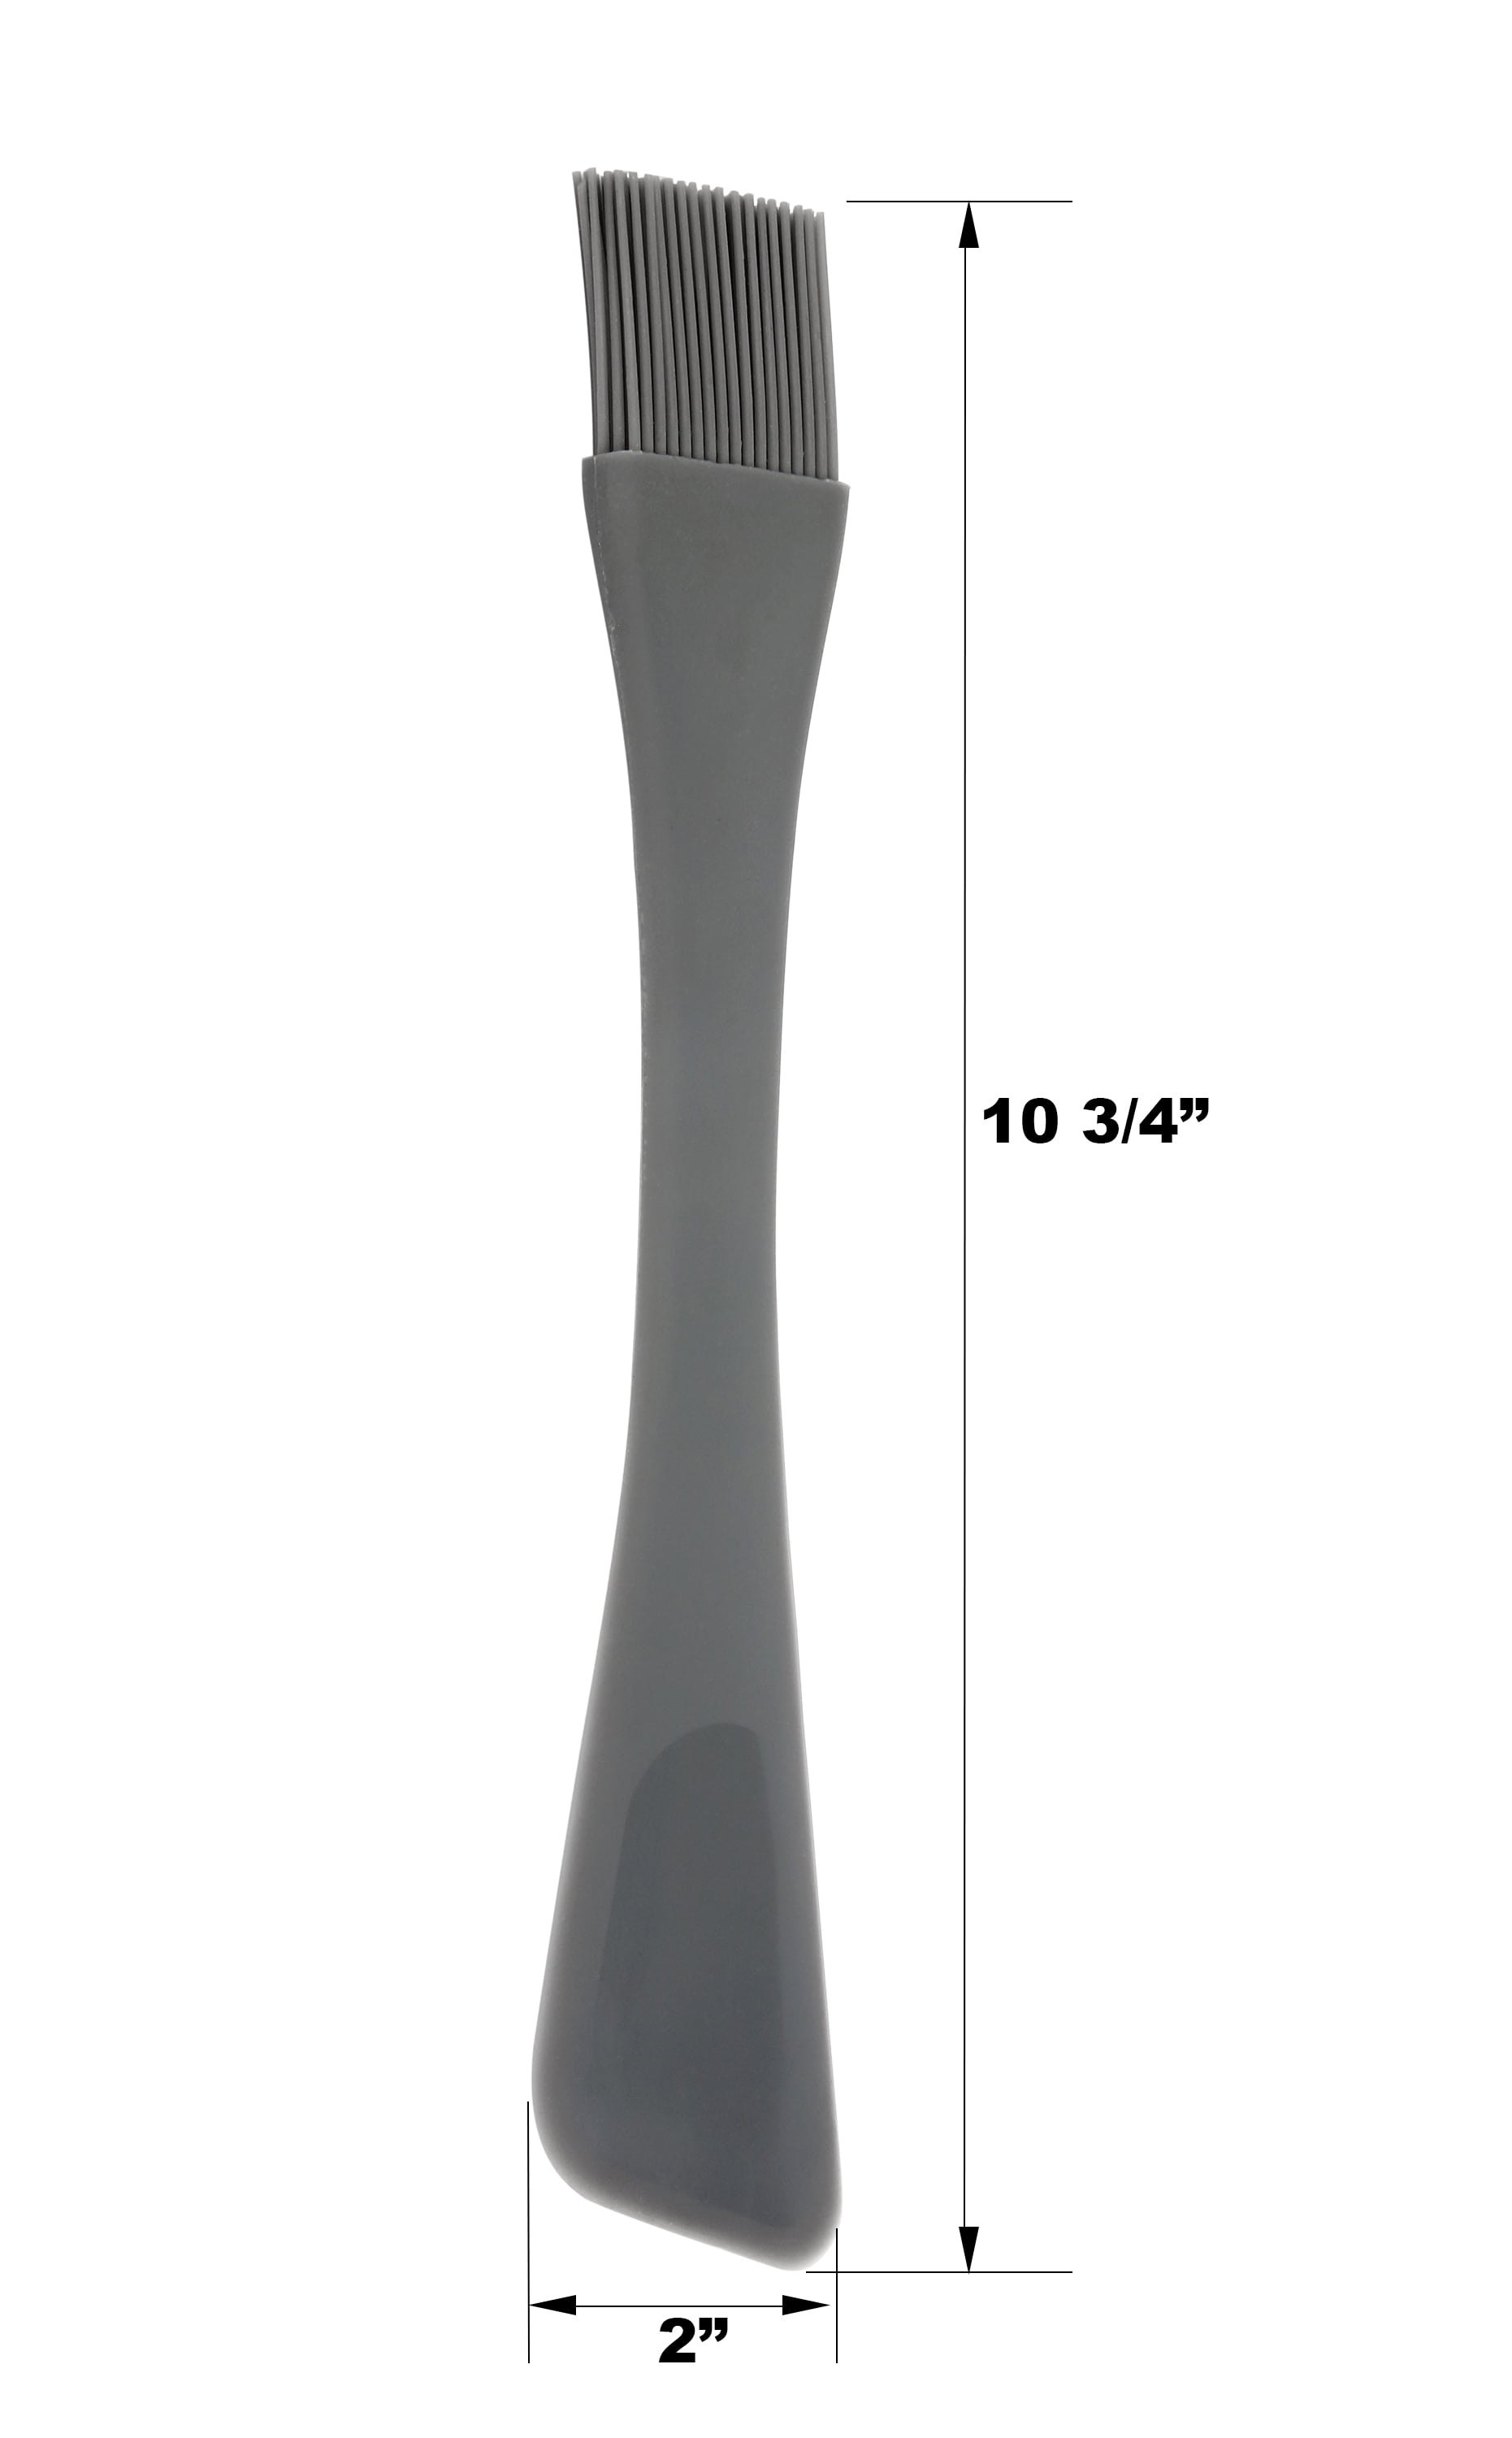 Charcoal Companion 15-Inch Basting Brush With Silicone Head - Loft410